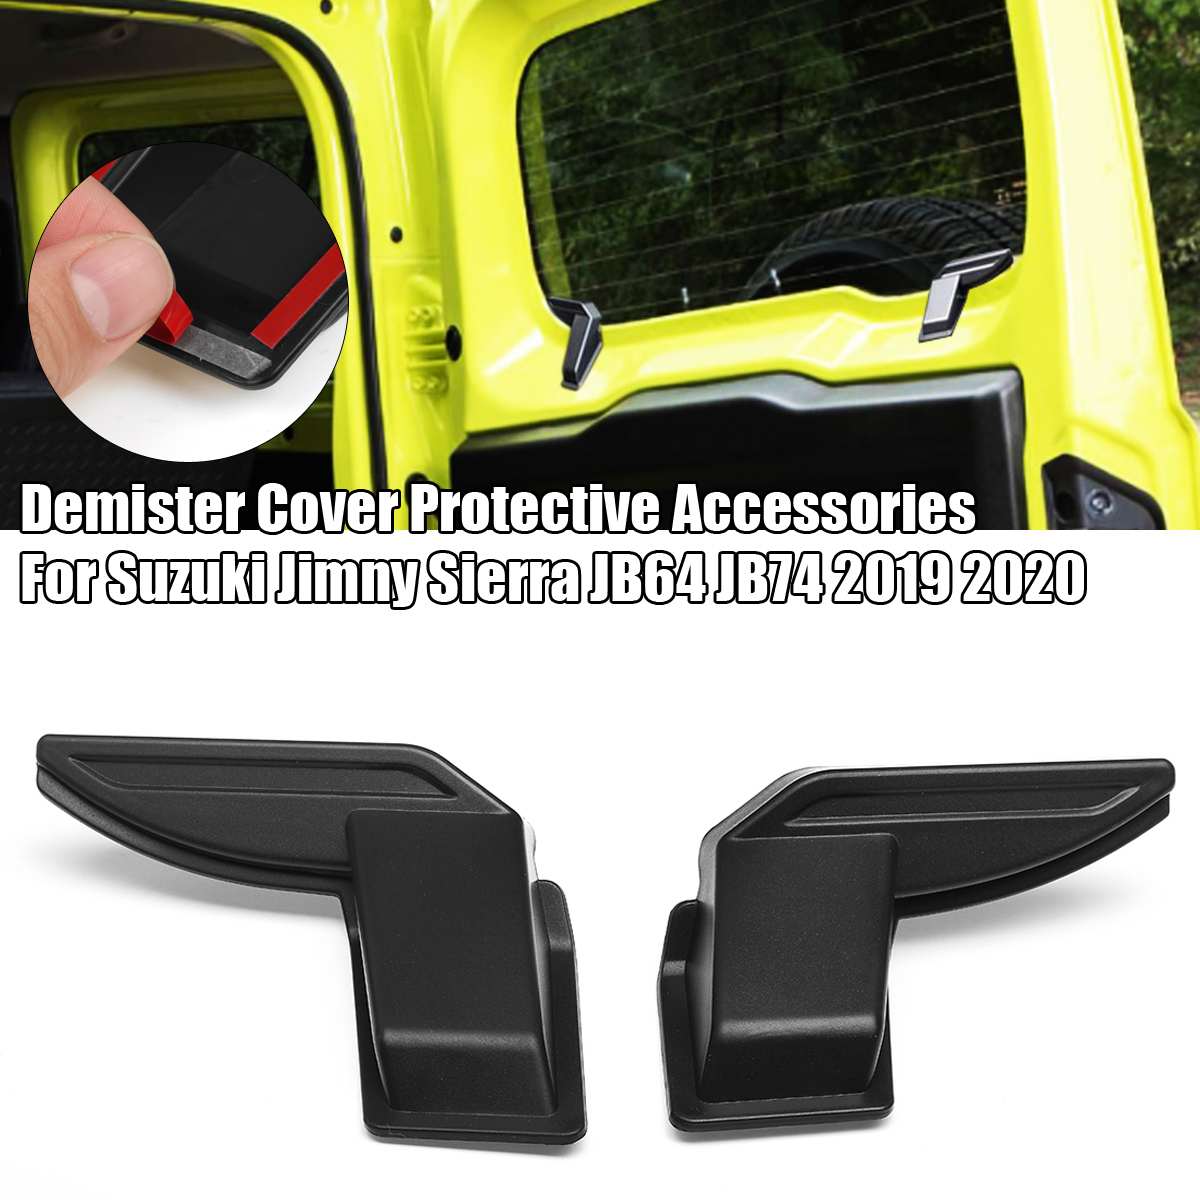 2 Stuks Auto Achter Voorruit Verwarmd Defogger Cover Beschermhoes Shell Voor Jimny Abs Auto Interieur Accessoires Auto Refit